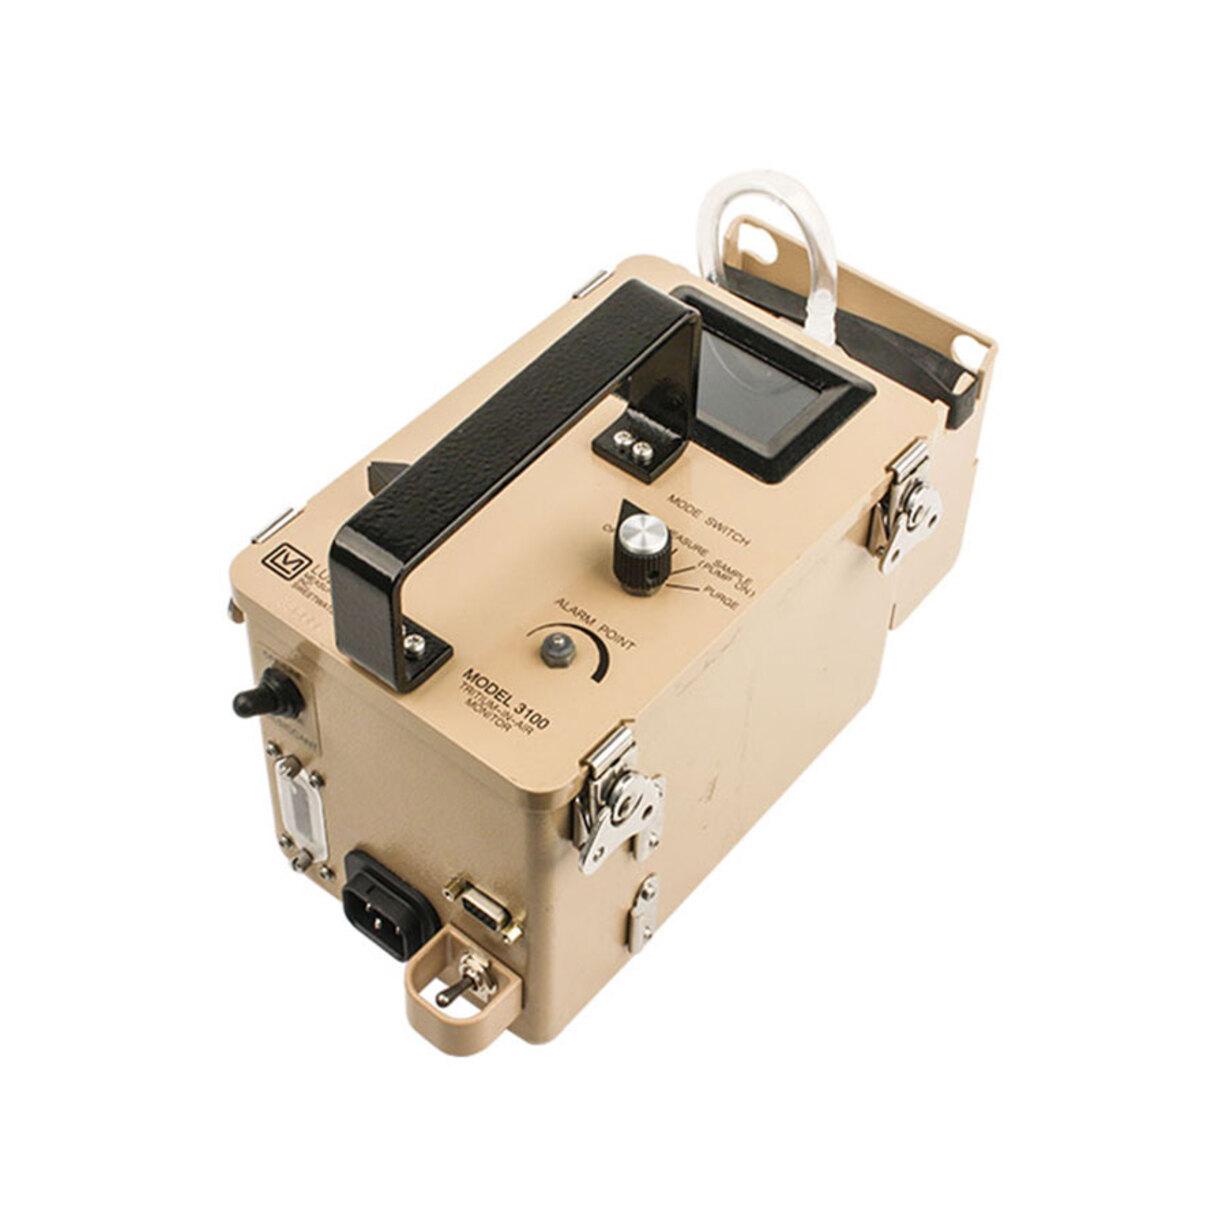 Model 3100 Portable Tritium in Air Monitor